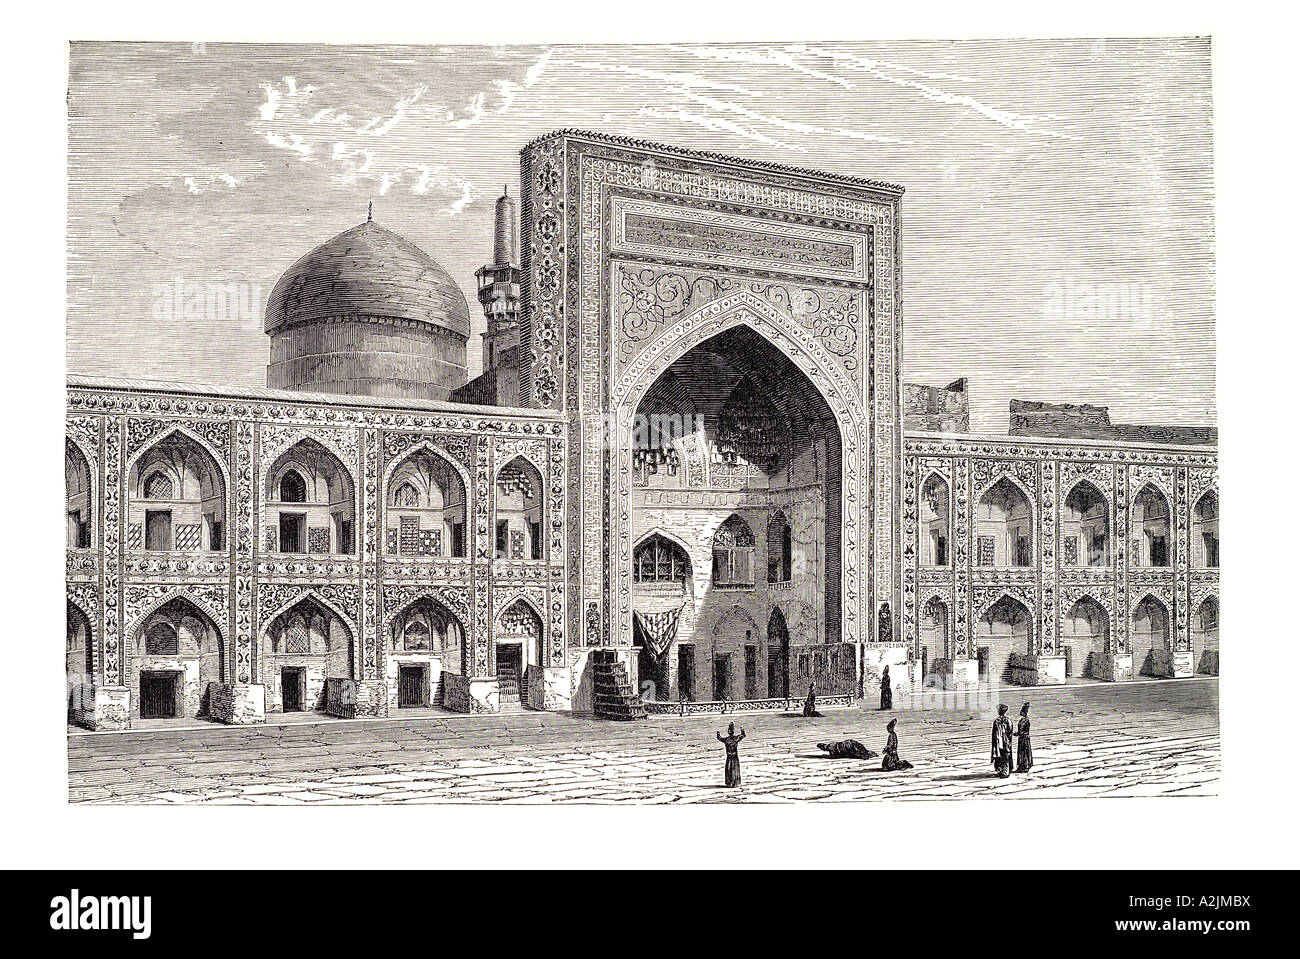 Masjid-i Masjid e imam Shah, Isfahan, Iran Iranian iwan royal madrasa Persia islam Islamic muslim religion ornate tilework tile Stock Photo